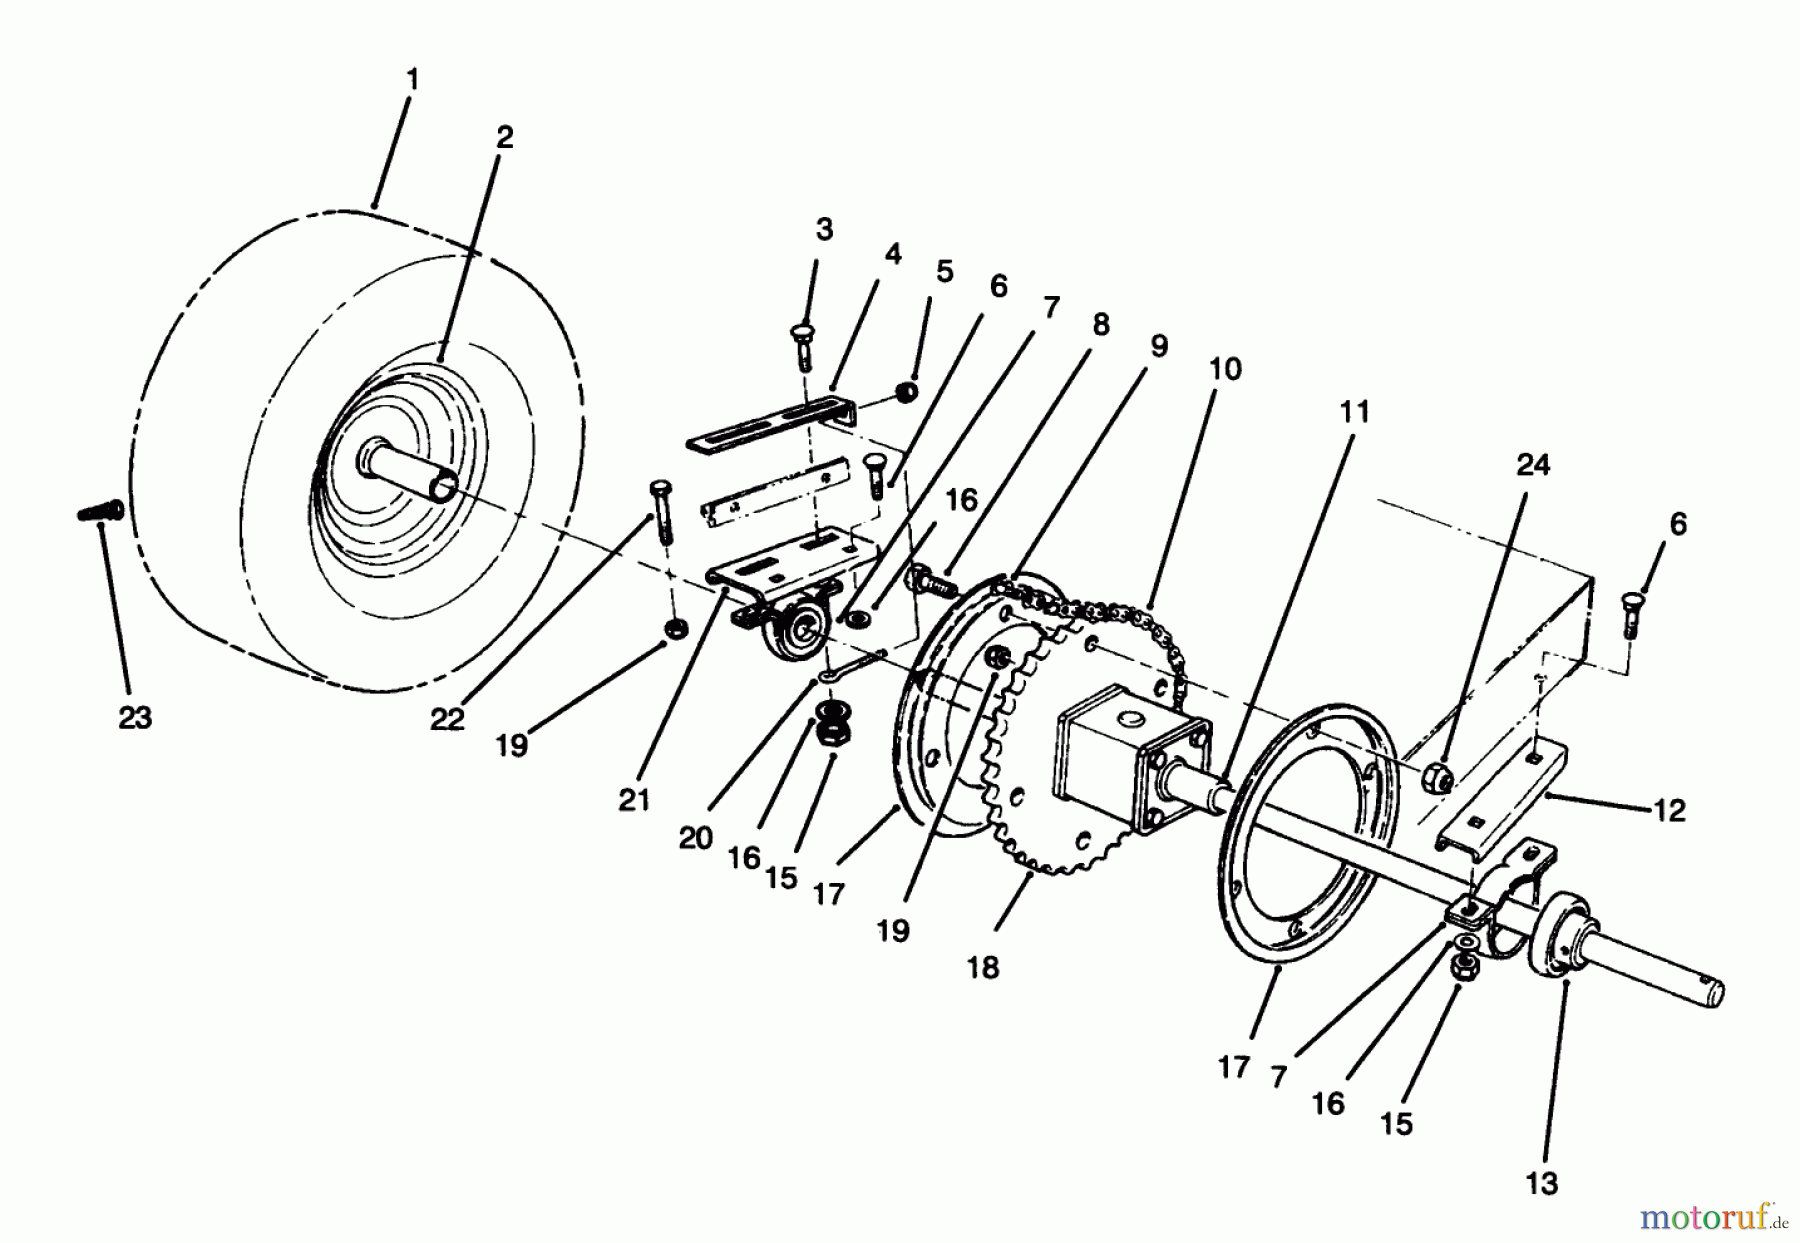  Toro Neu Mowers, Rear-Engine Rider 70040 (8-25) - Toro 8-25 Rear Engine Rider, 1997 (7900001-7900578) REAR AXLE ASSEMBLY